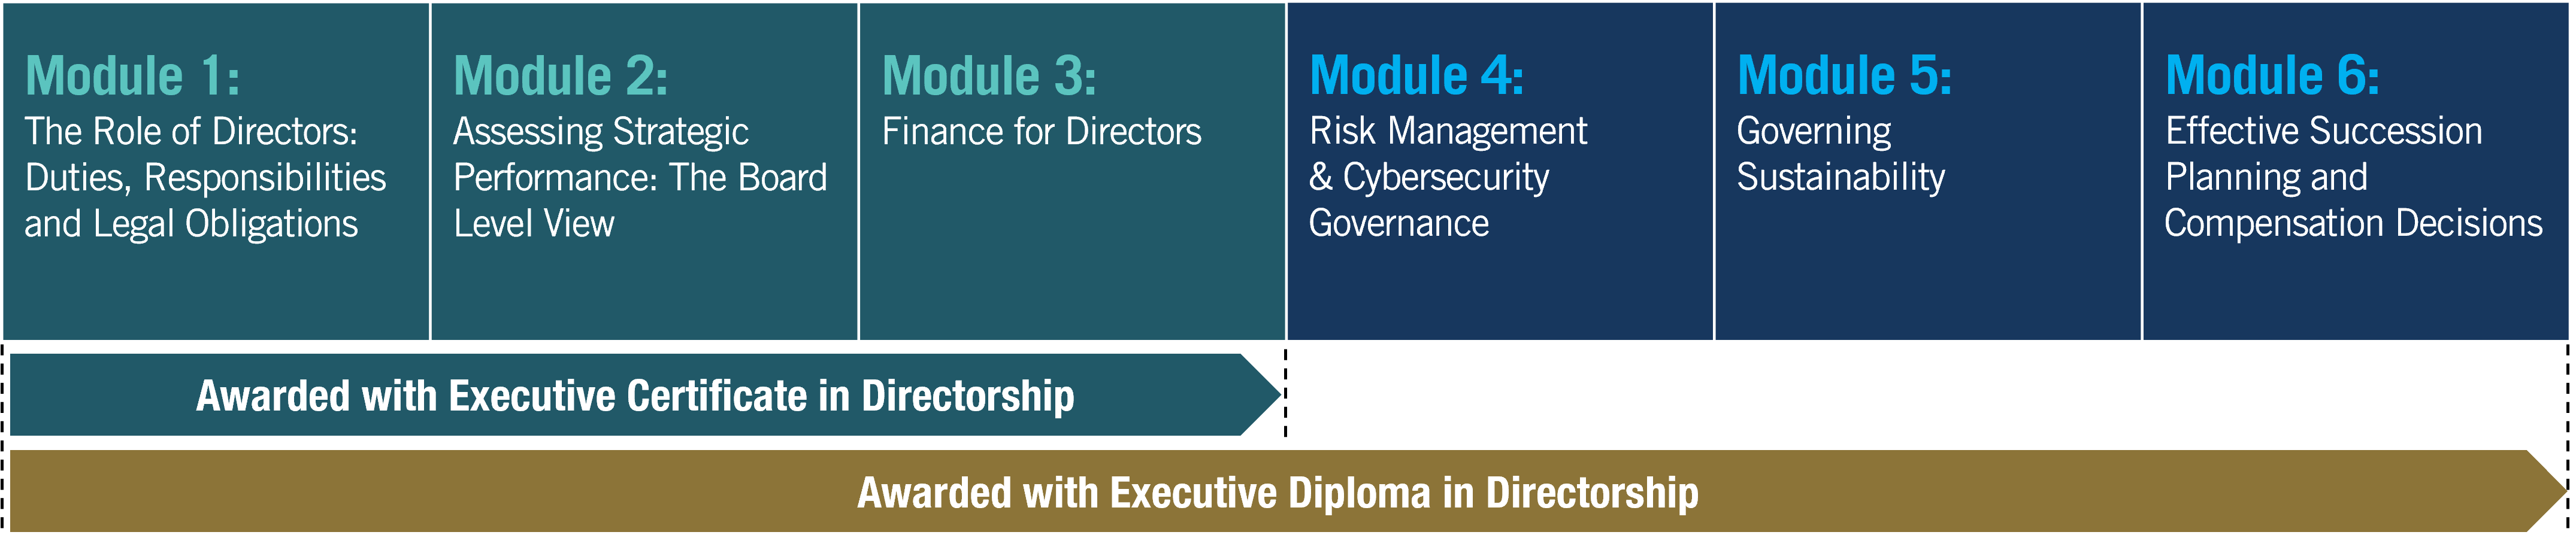 Executive Certificate in Directorship